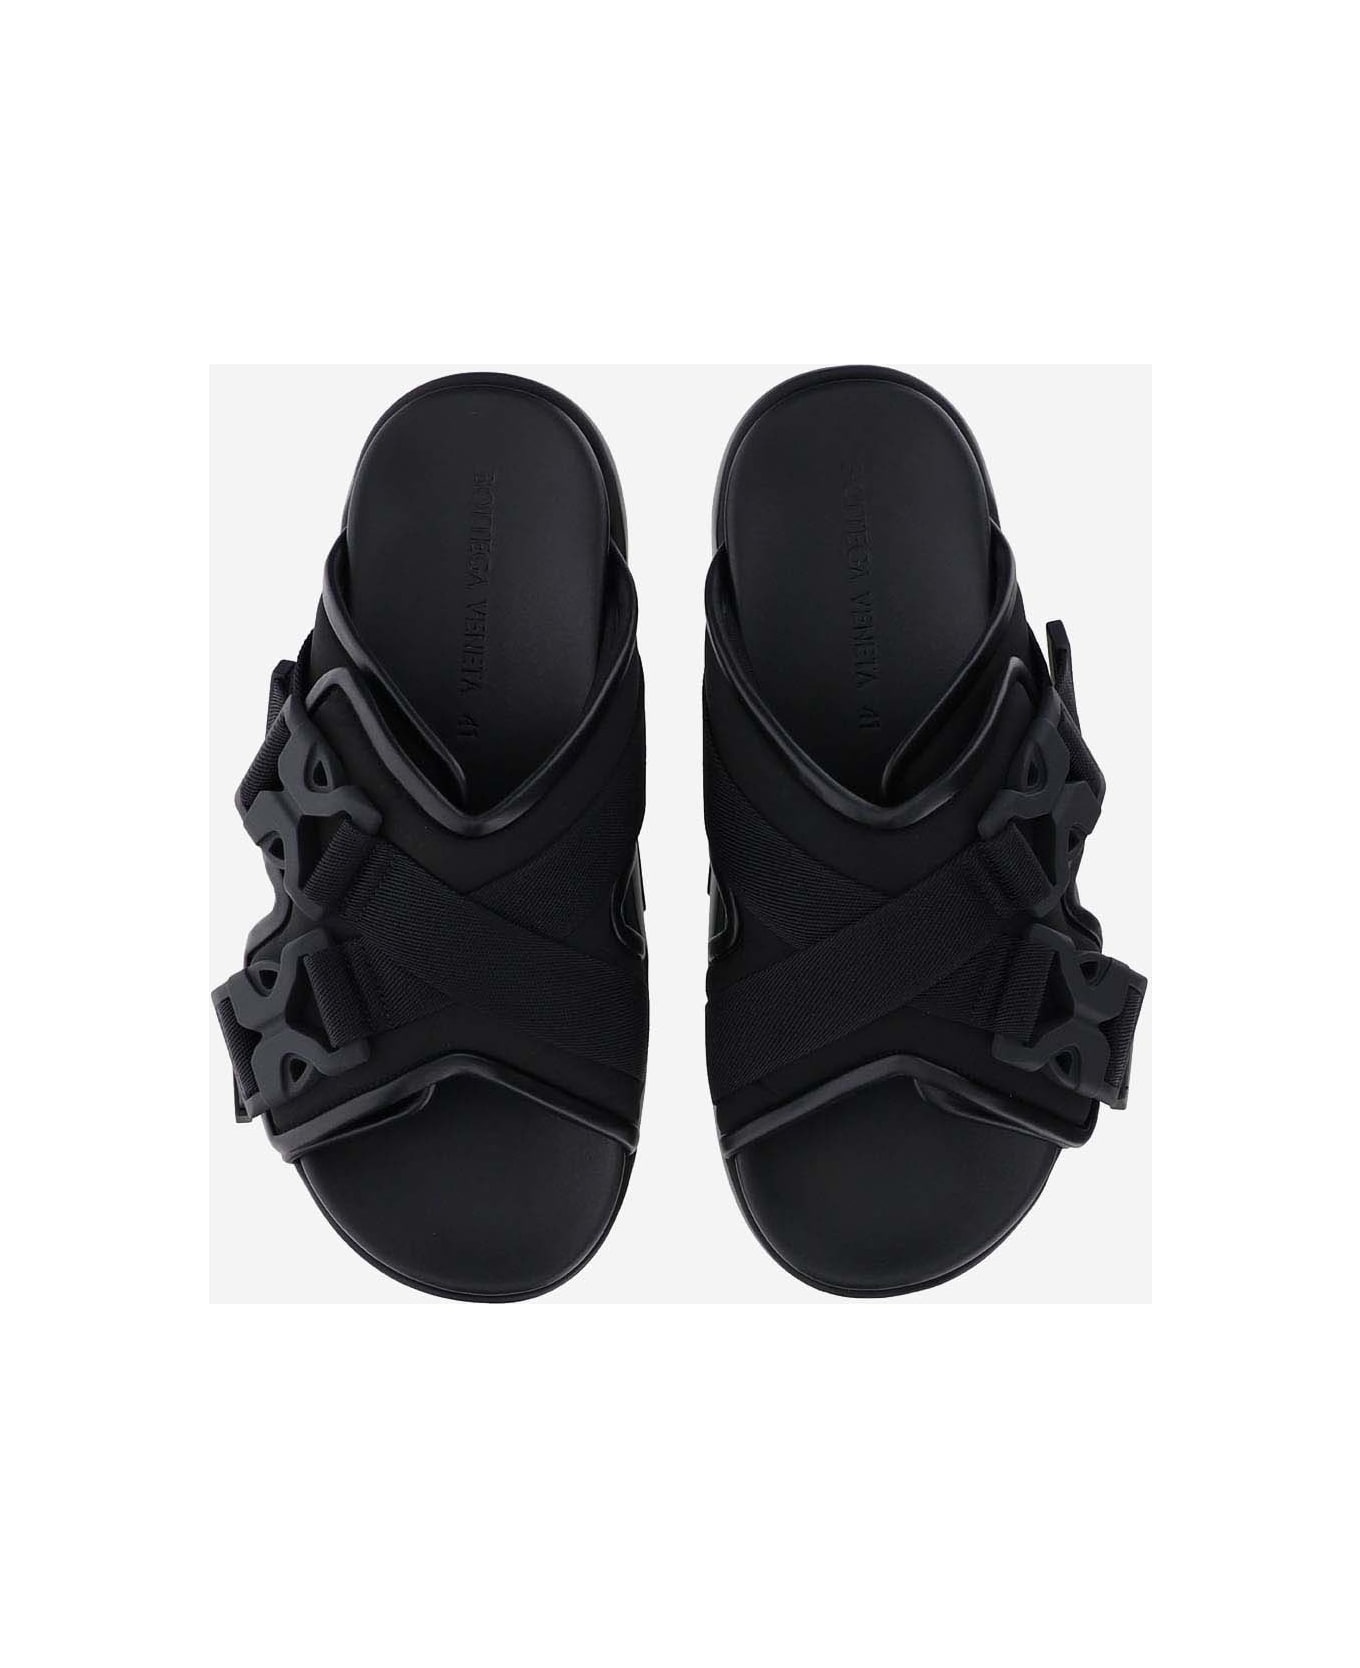 Bottega Veneta Fabric Sandals - Black